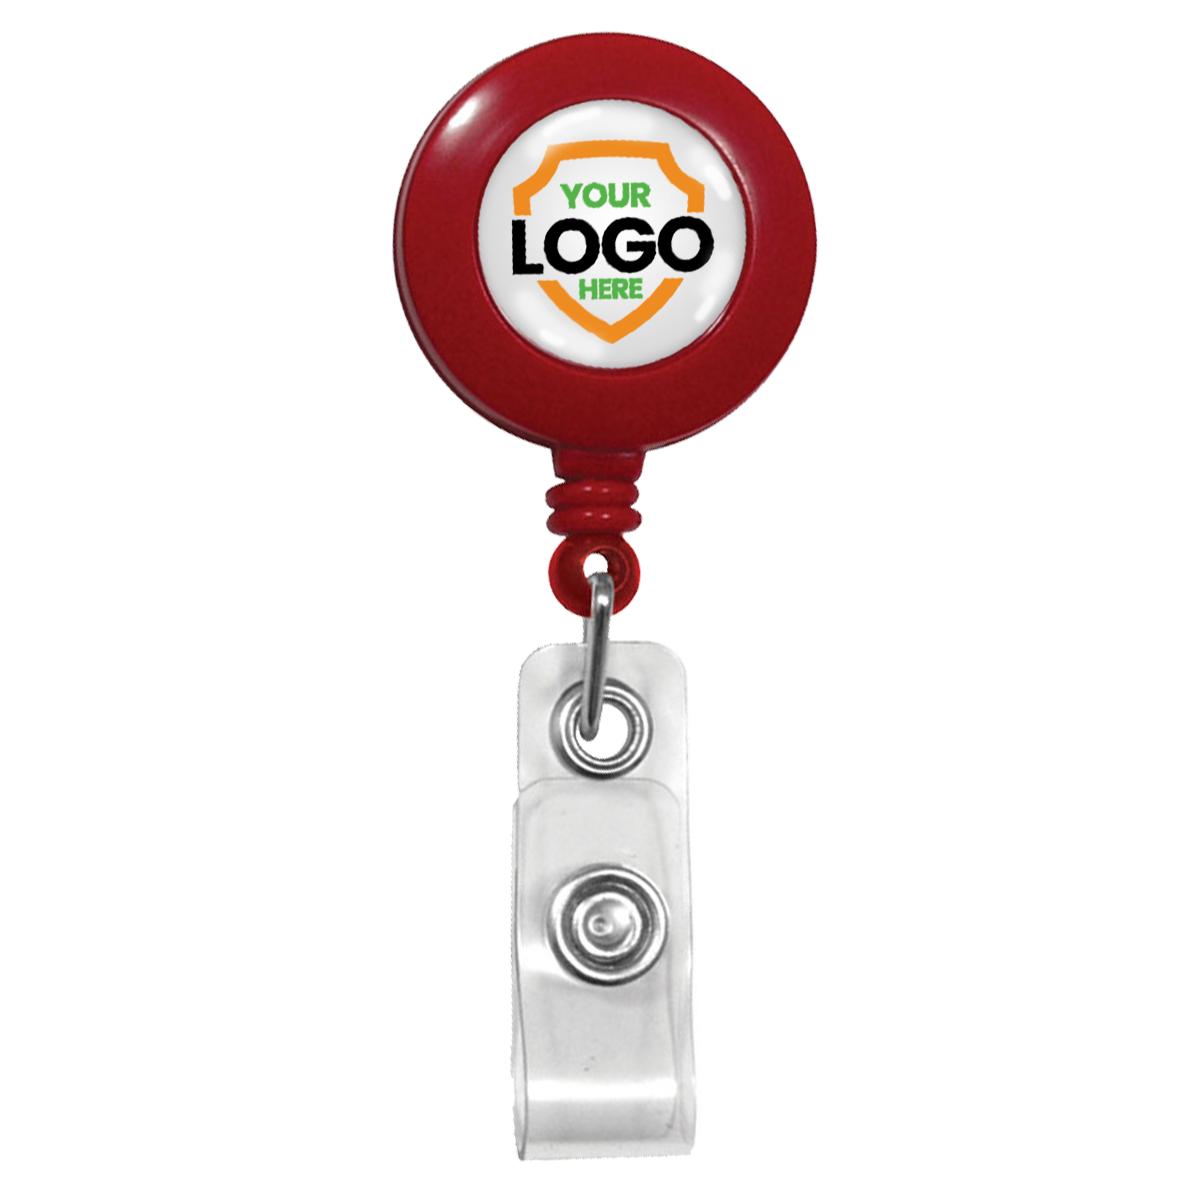 customizable badge reels - standard retractable custom badge reels for business branding 2120-3036 red